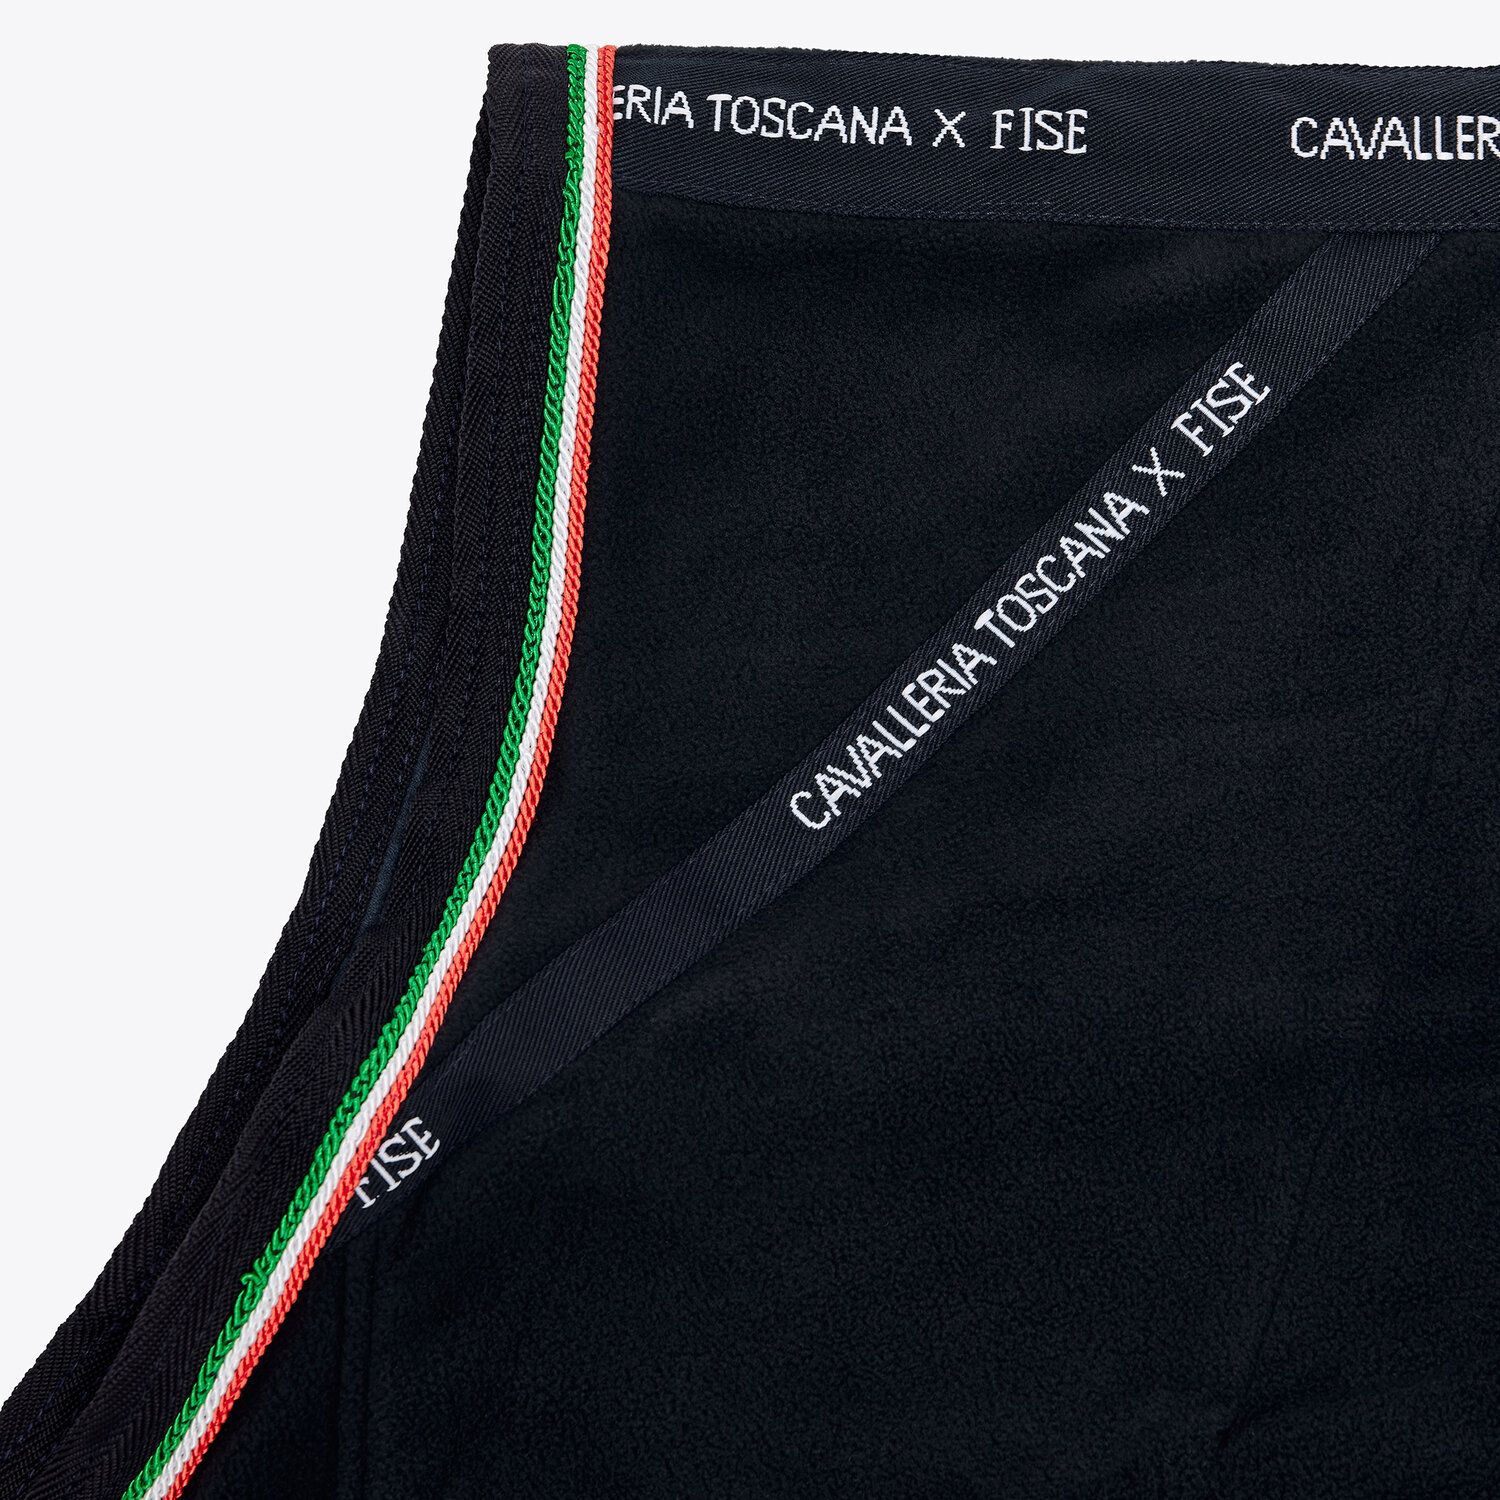 Cavalleria Toscana FISE fleece rug NAVY-4